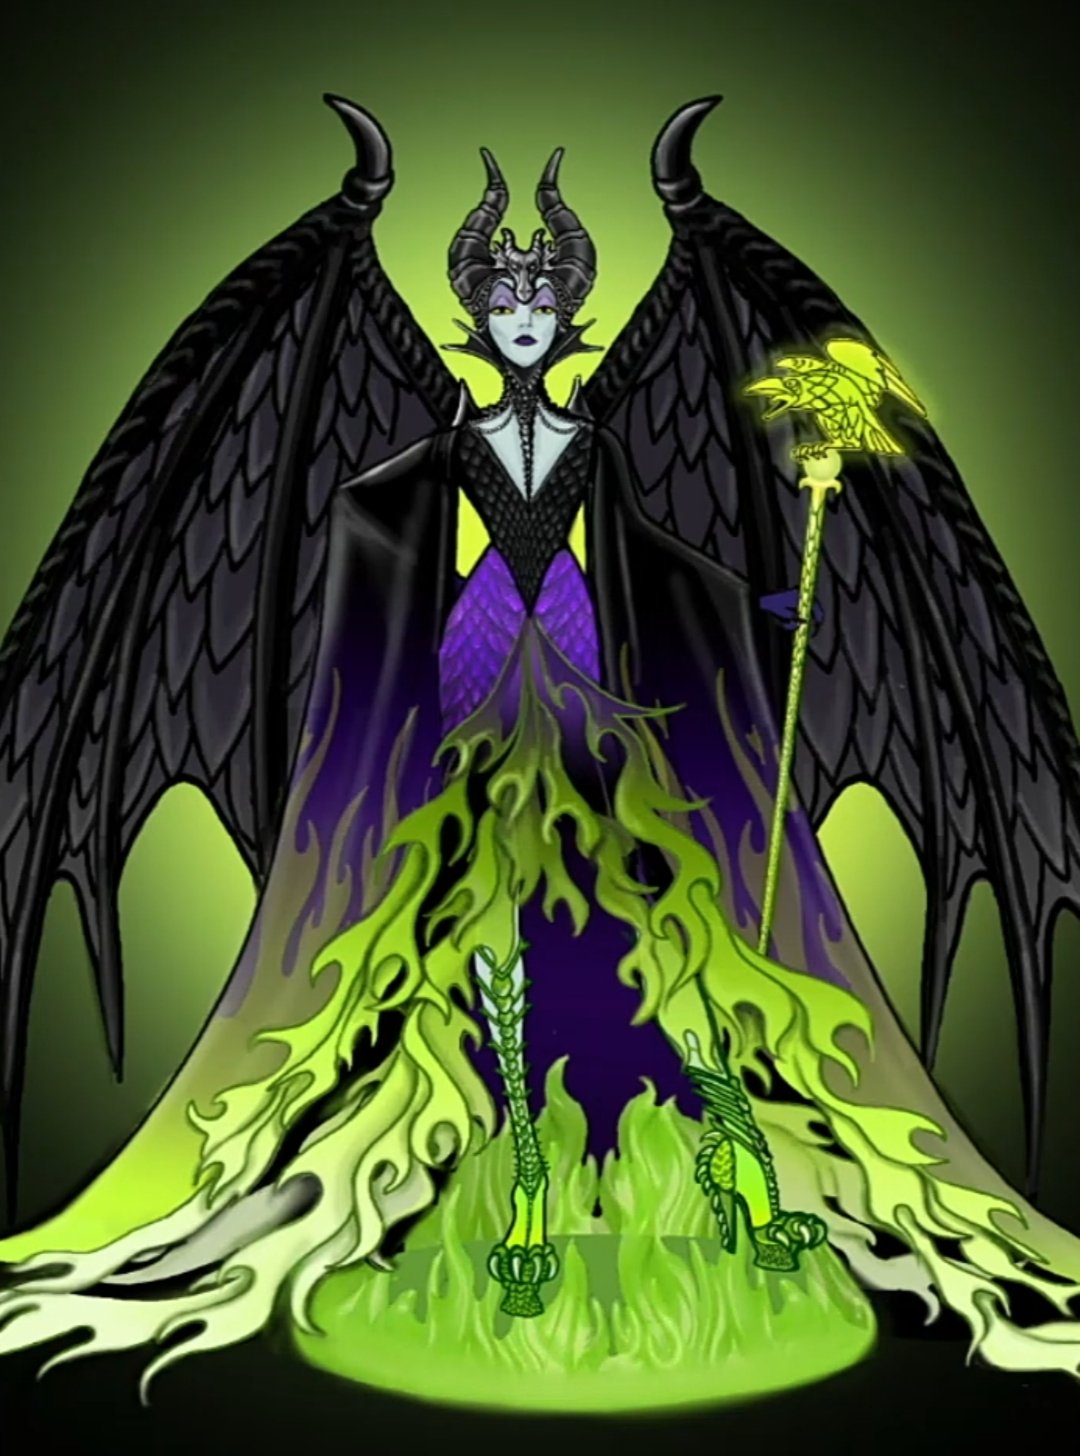 Mattel Creations Darkness Descends Series Maleficent doll - YouLoveIt.com